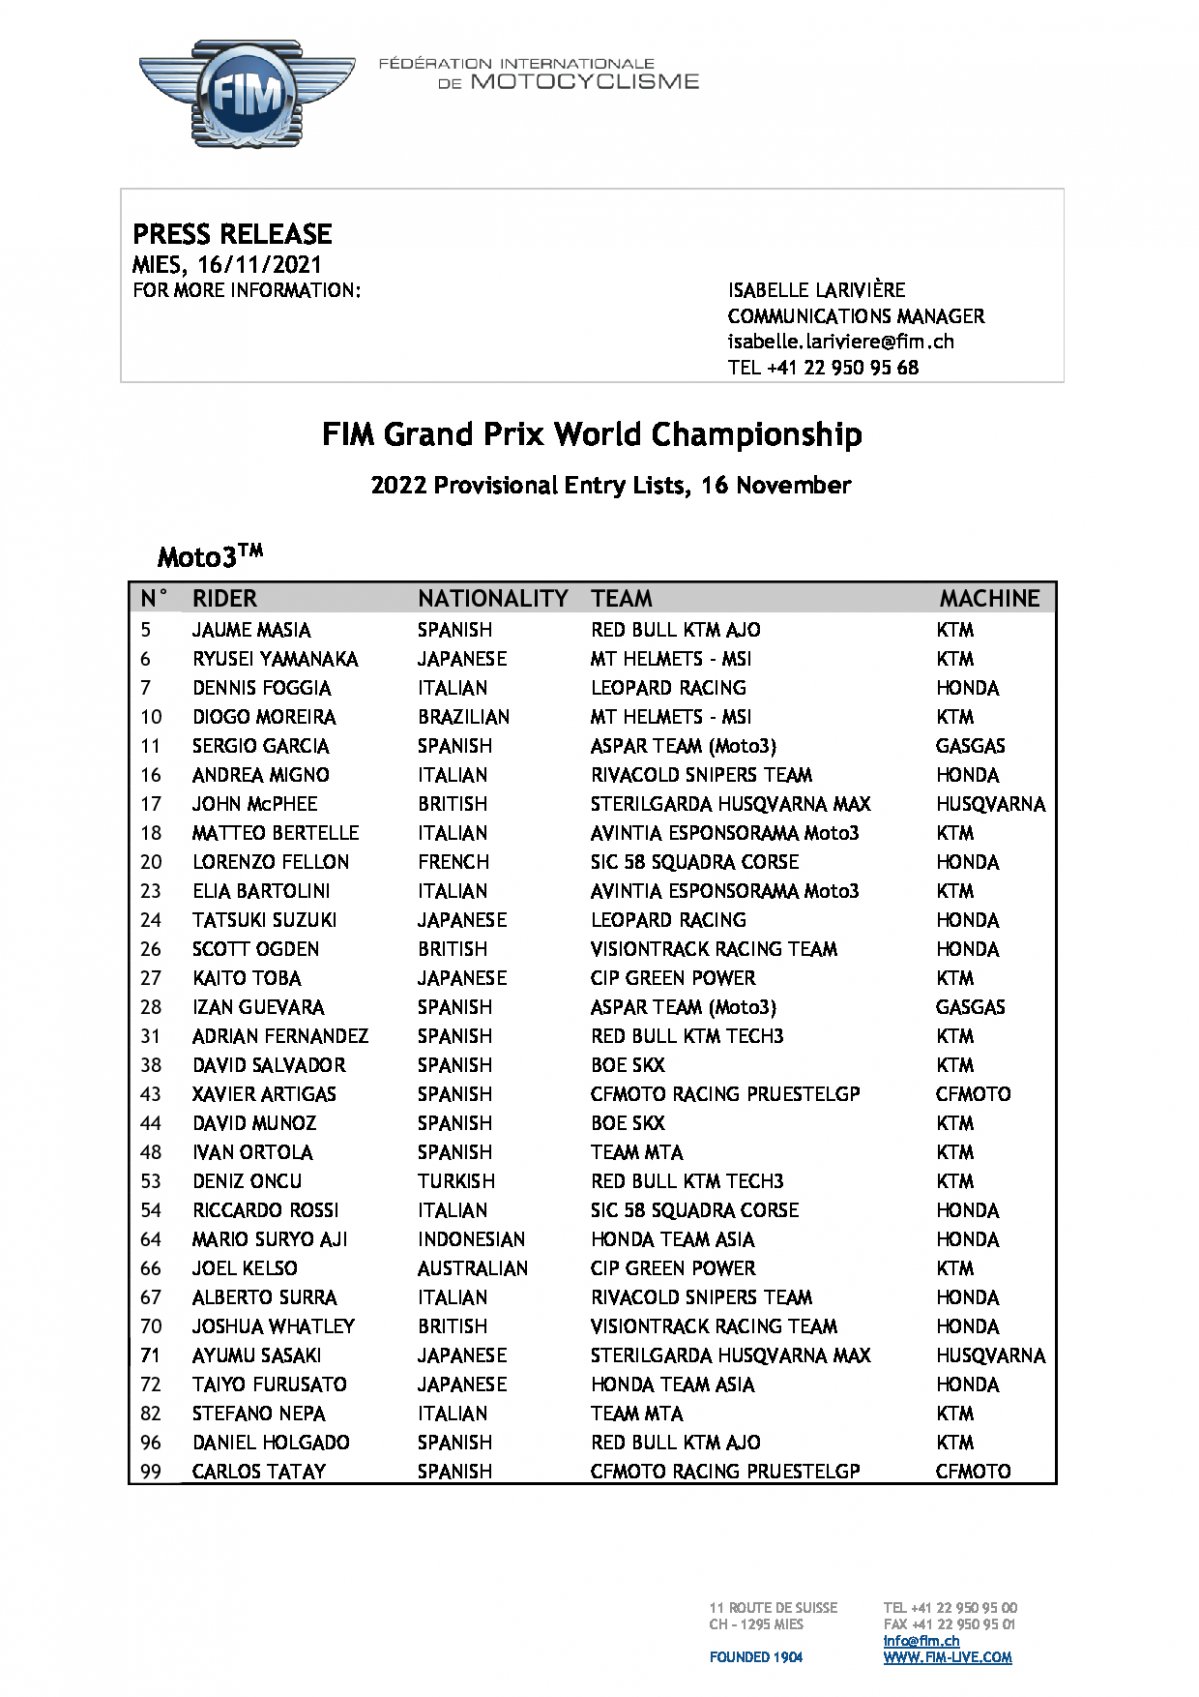 Списки пилотов чемпионата мира 2022 по Мото Гран-При - Moto3, Moto2, MotoGP